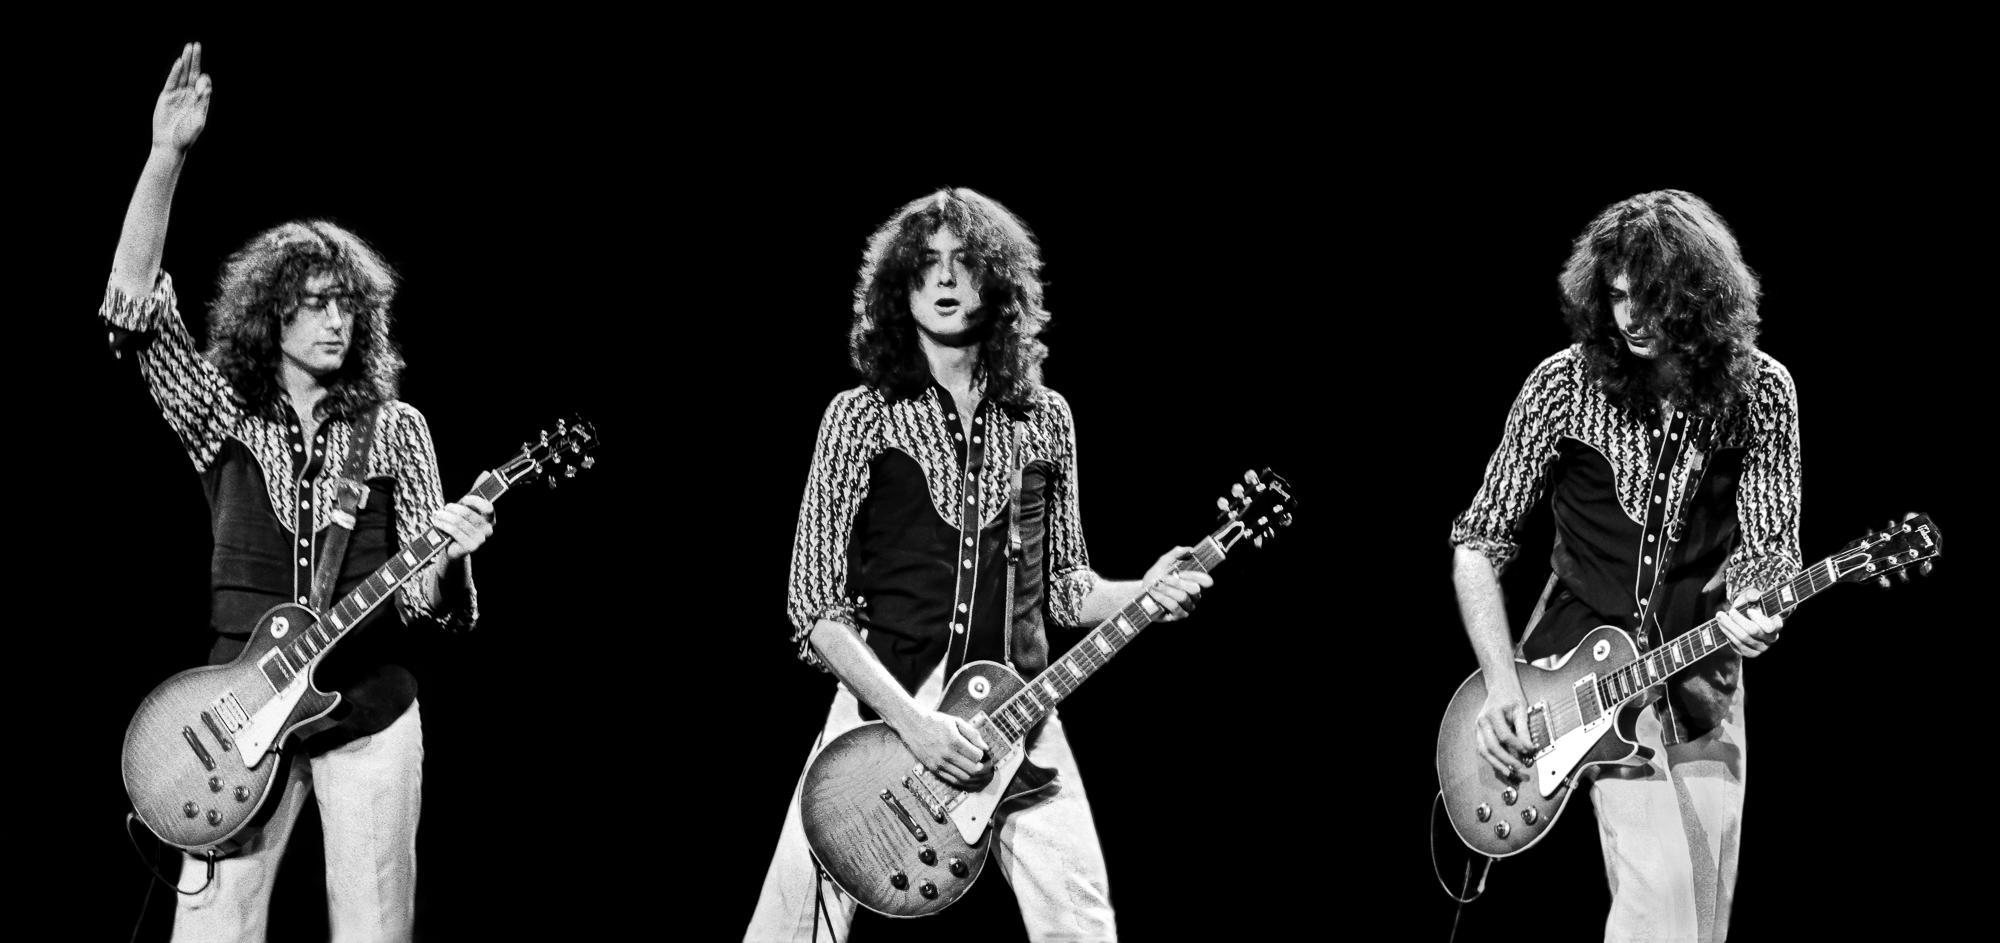 Lynn Goldsmith Portrait Photograph - New release - Jimmy Page Led Zeppelin 1975 triptych 